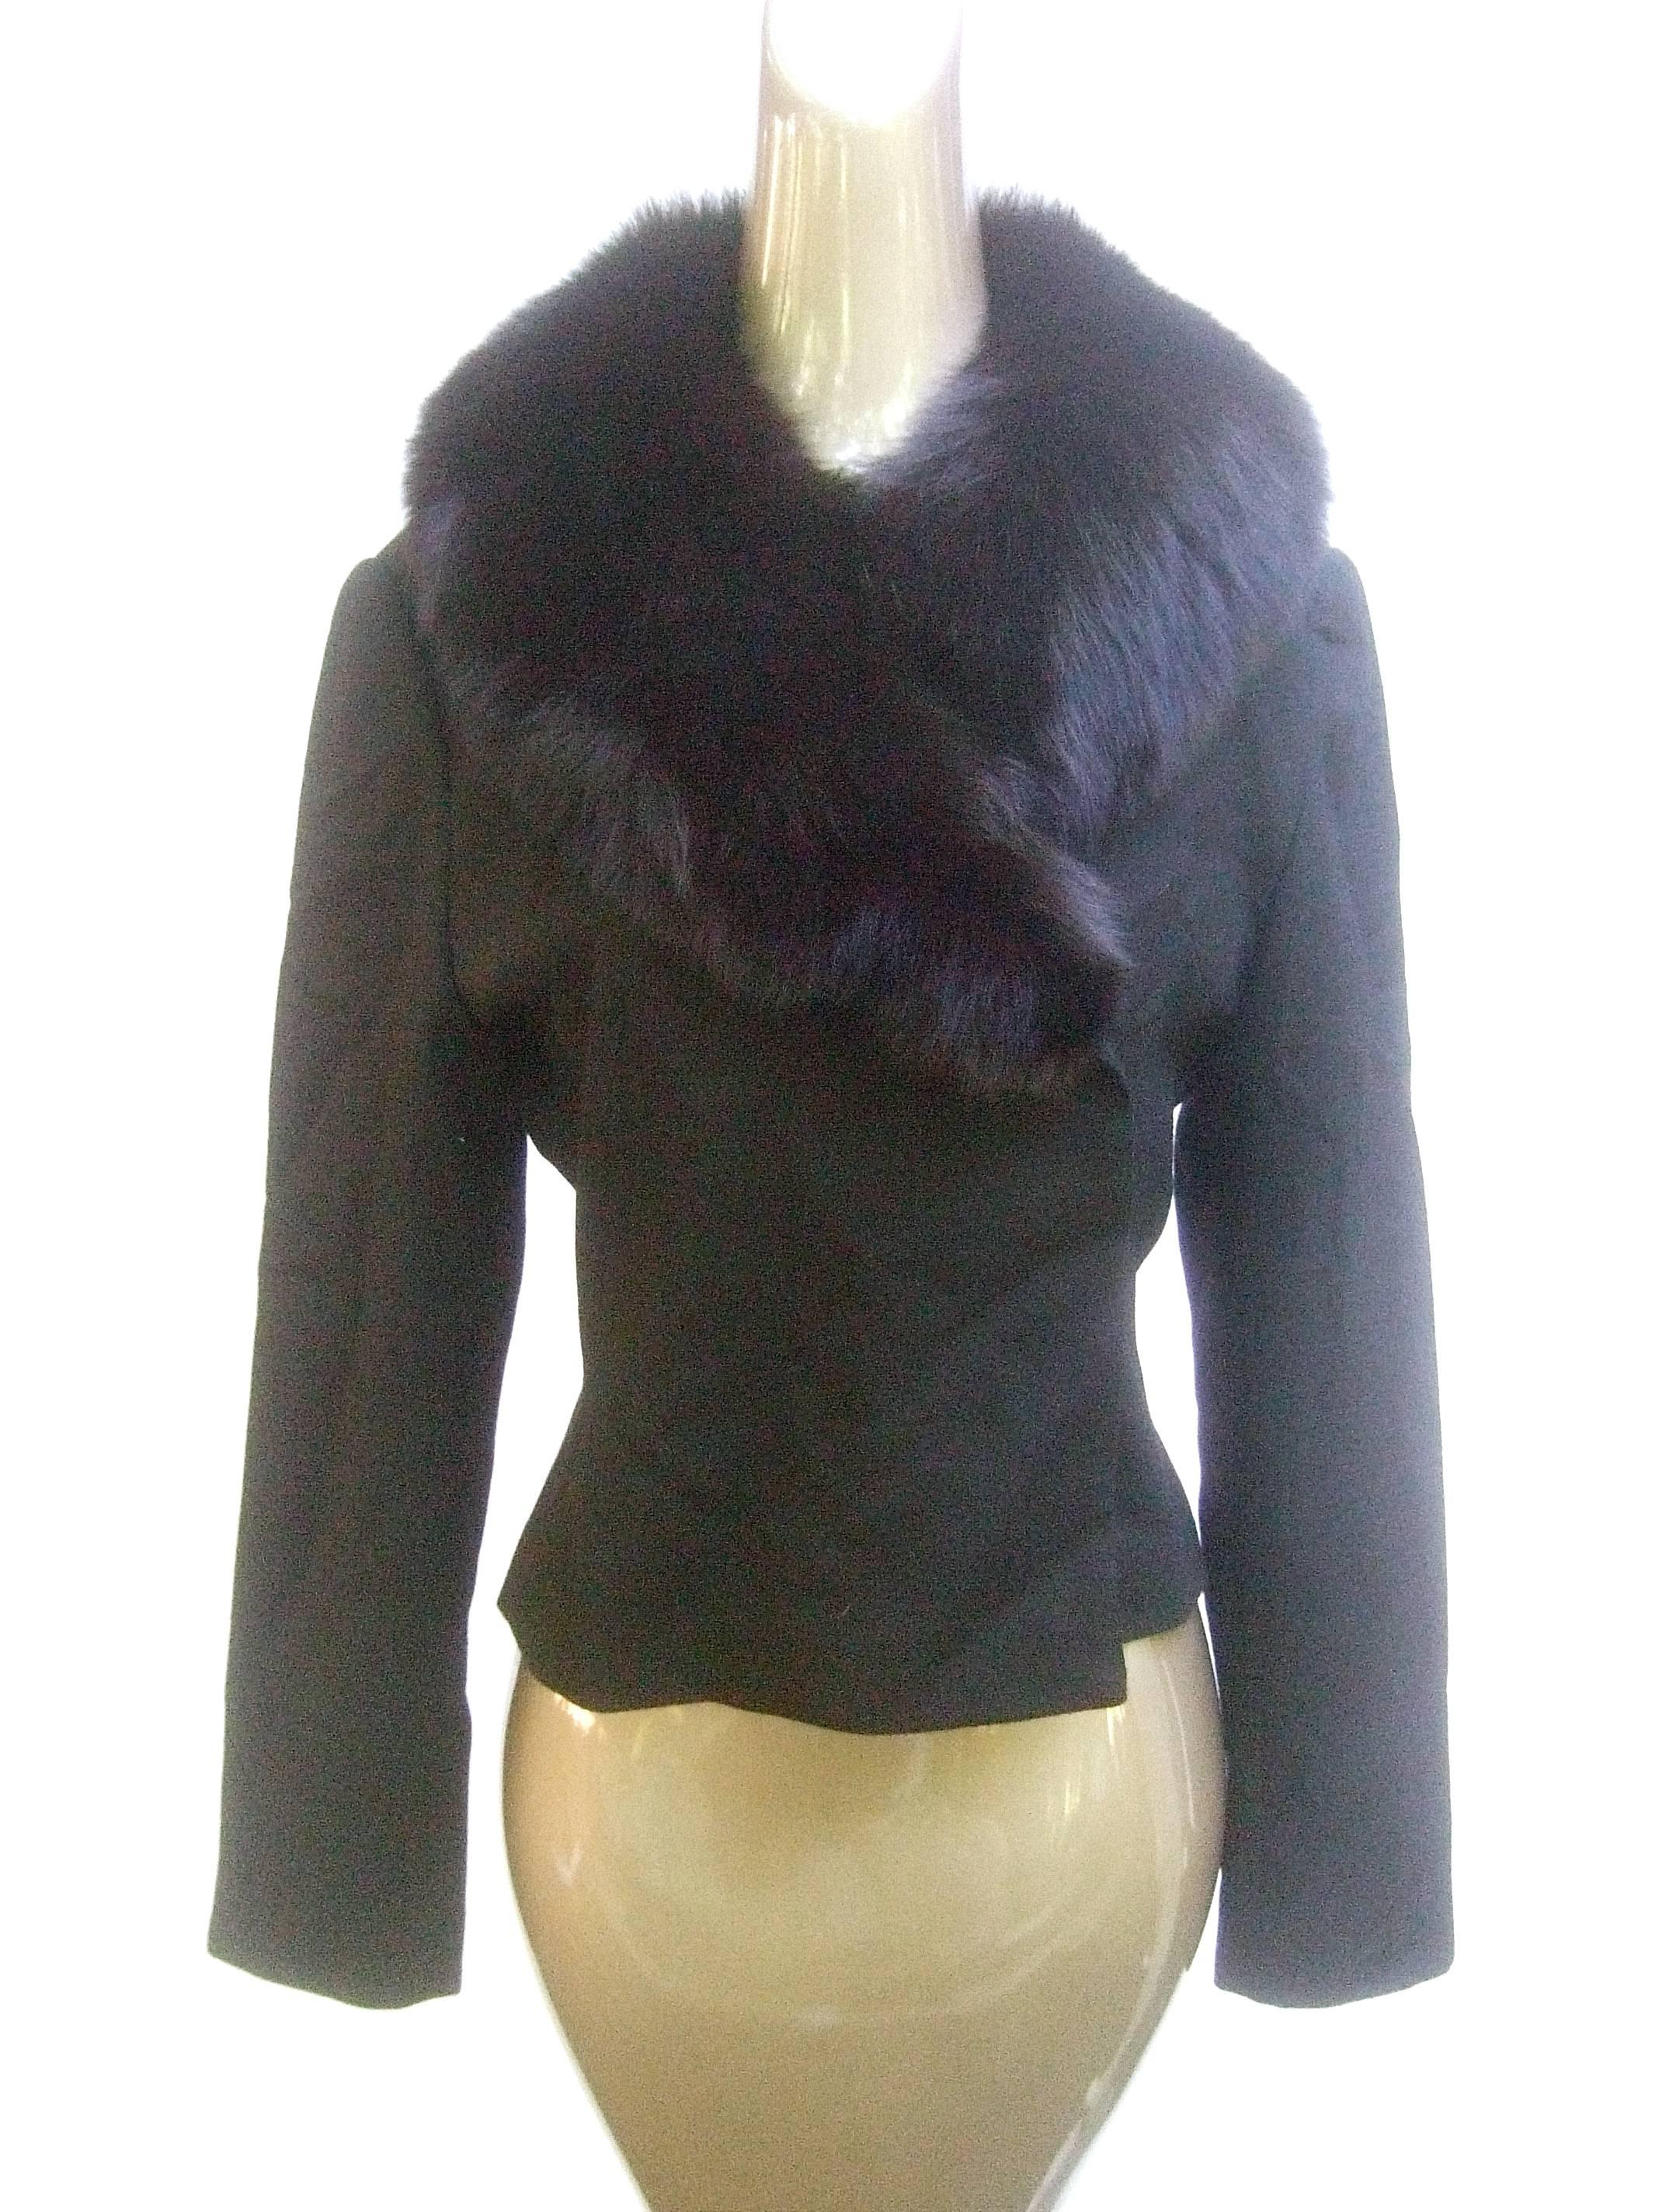 Neiman Marcus Fox Collar Black Wool Jacket c 1980s 1